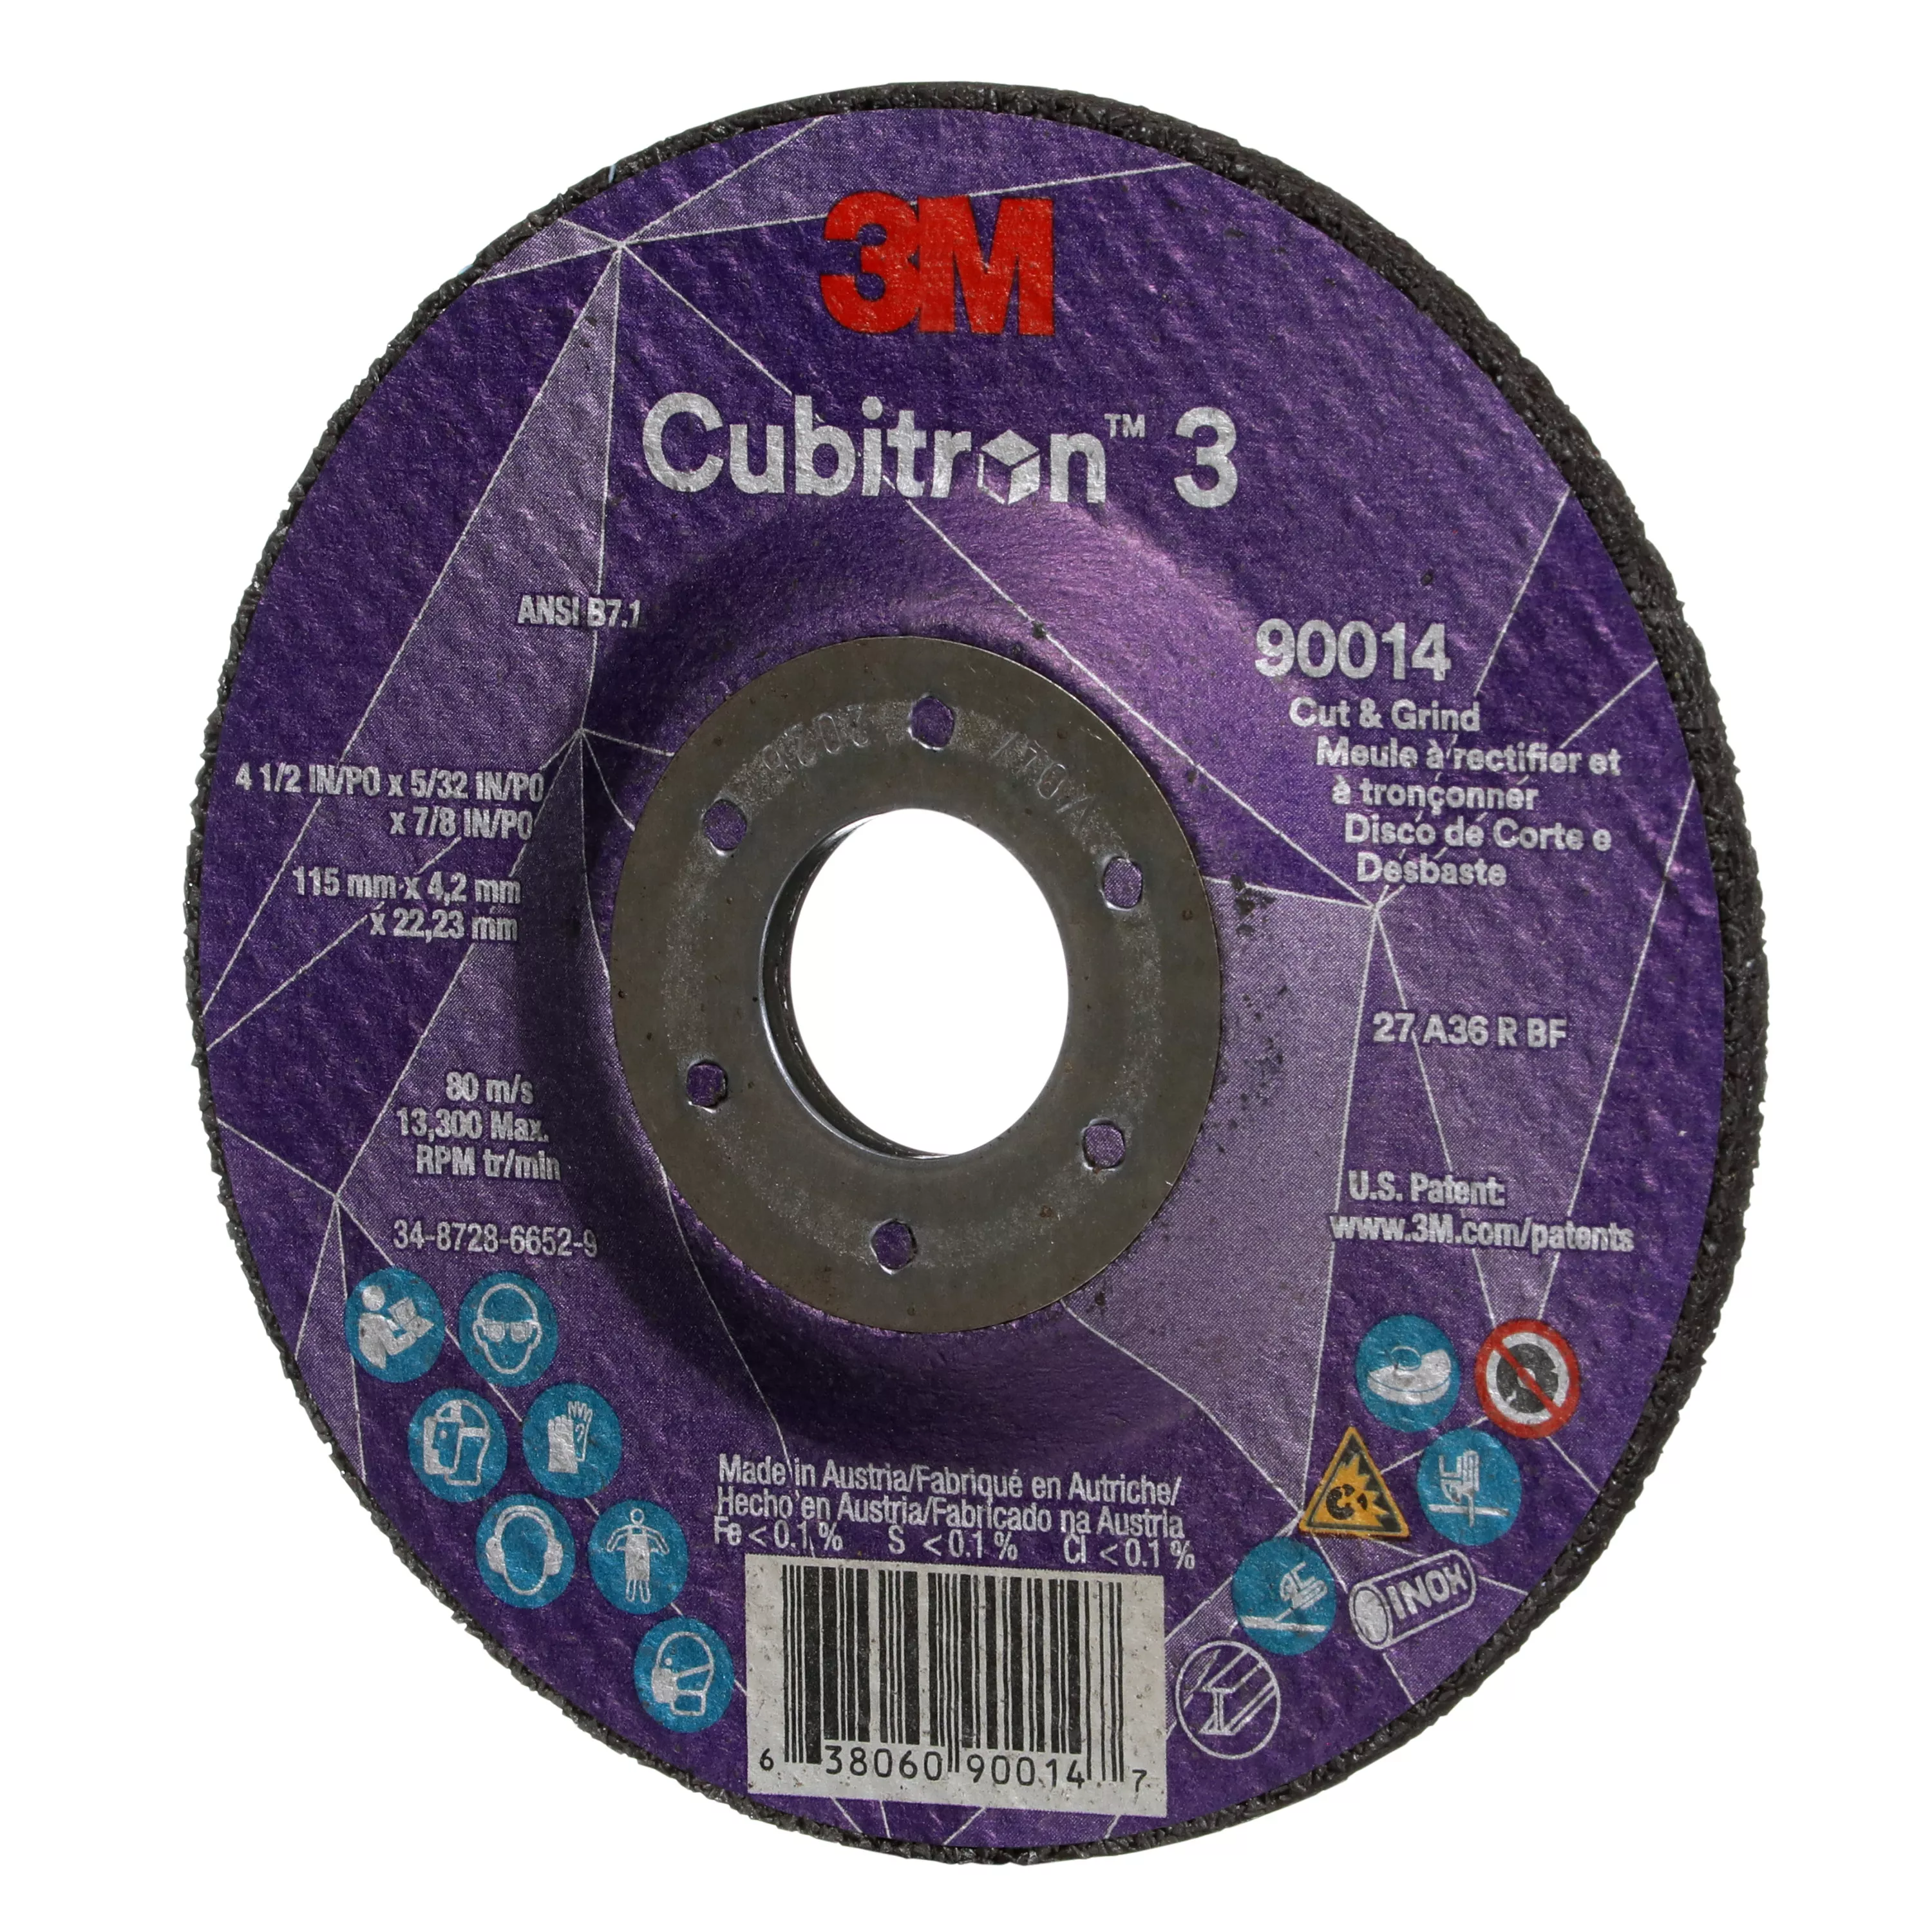 SKU 7100303968 | 3M™ Cubitron™ 3 Cut and Grind Wheel